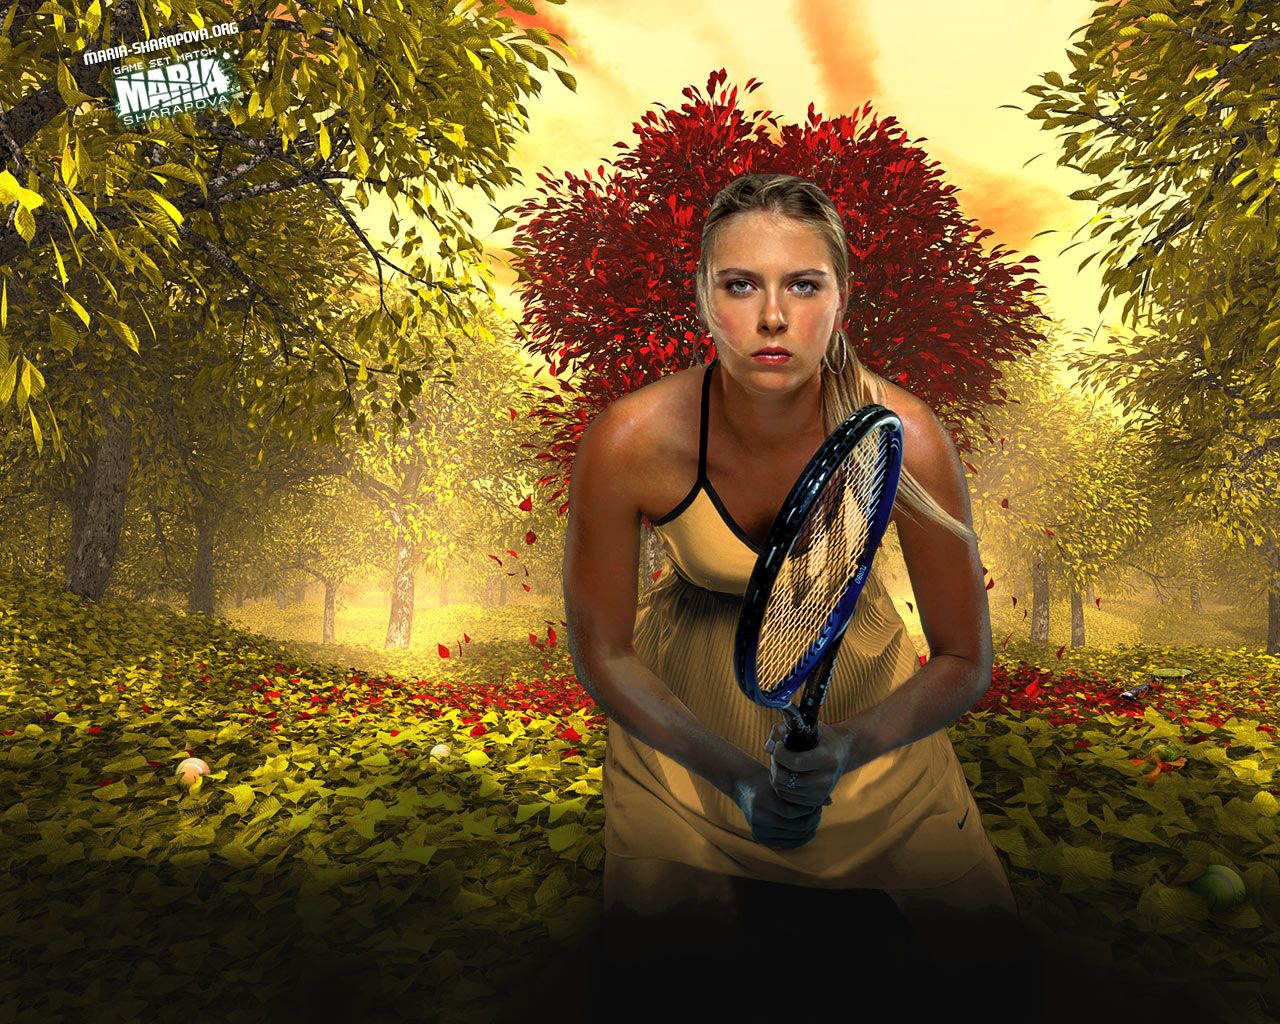 Maria Sharapova - Tennis Princess